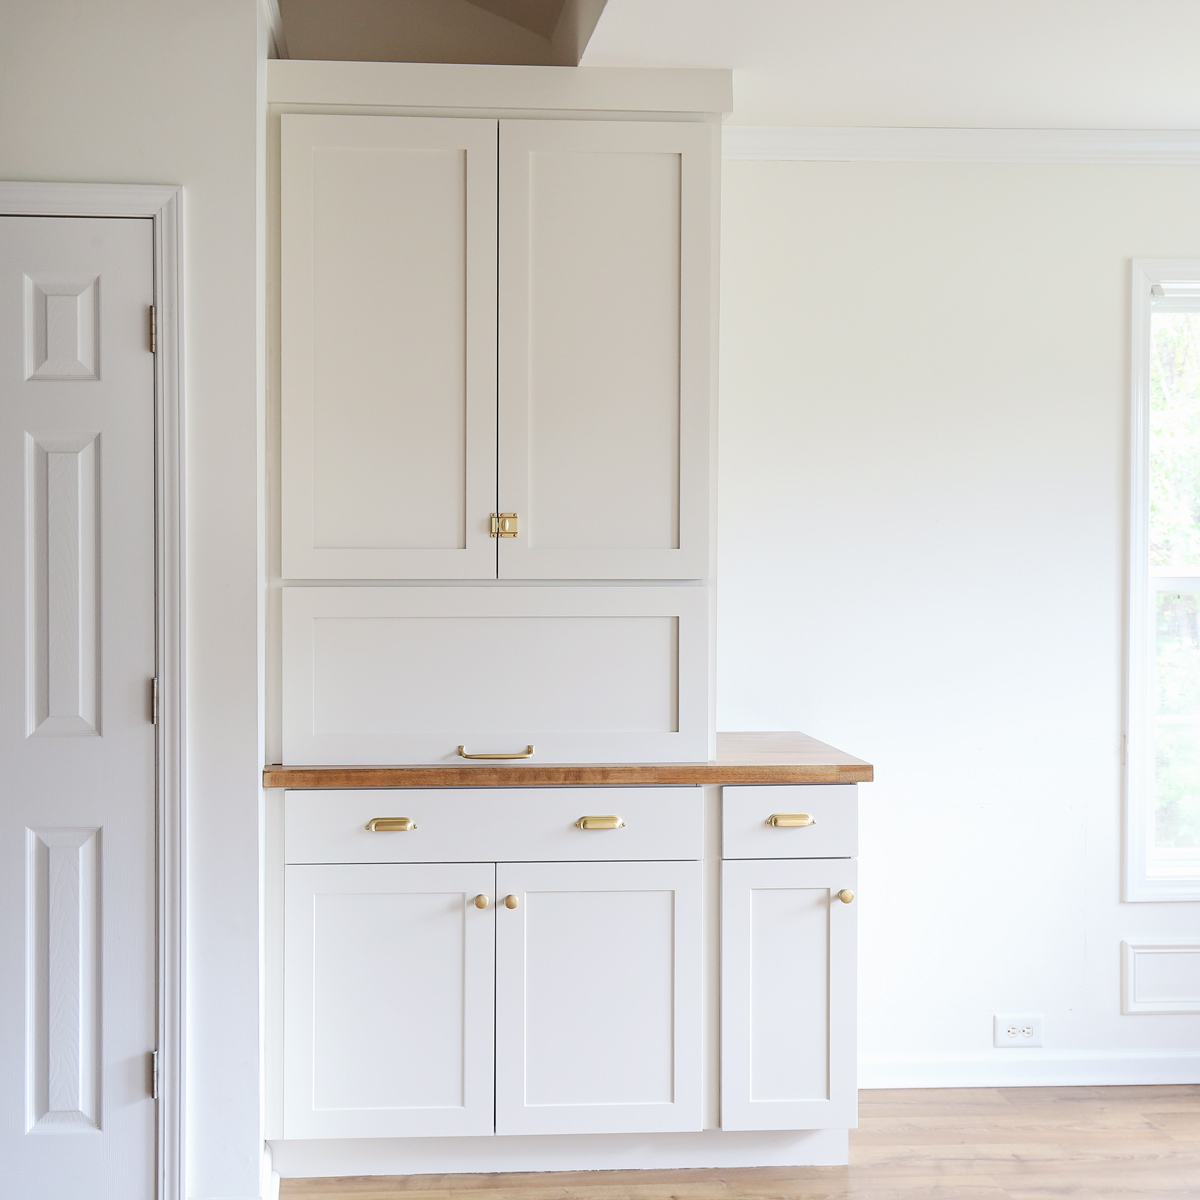 https://angelamariemade.com/wp-content/uploads/2022/11/Kitchen-DIY-Built-in-Cabinets-Part-2-6666.jpg